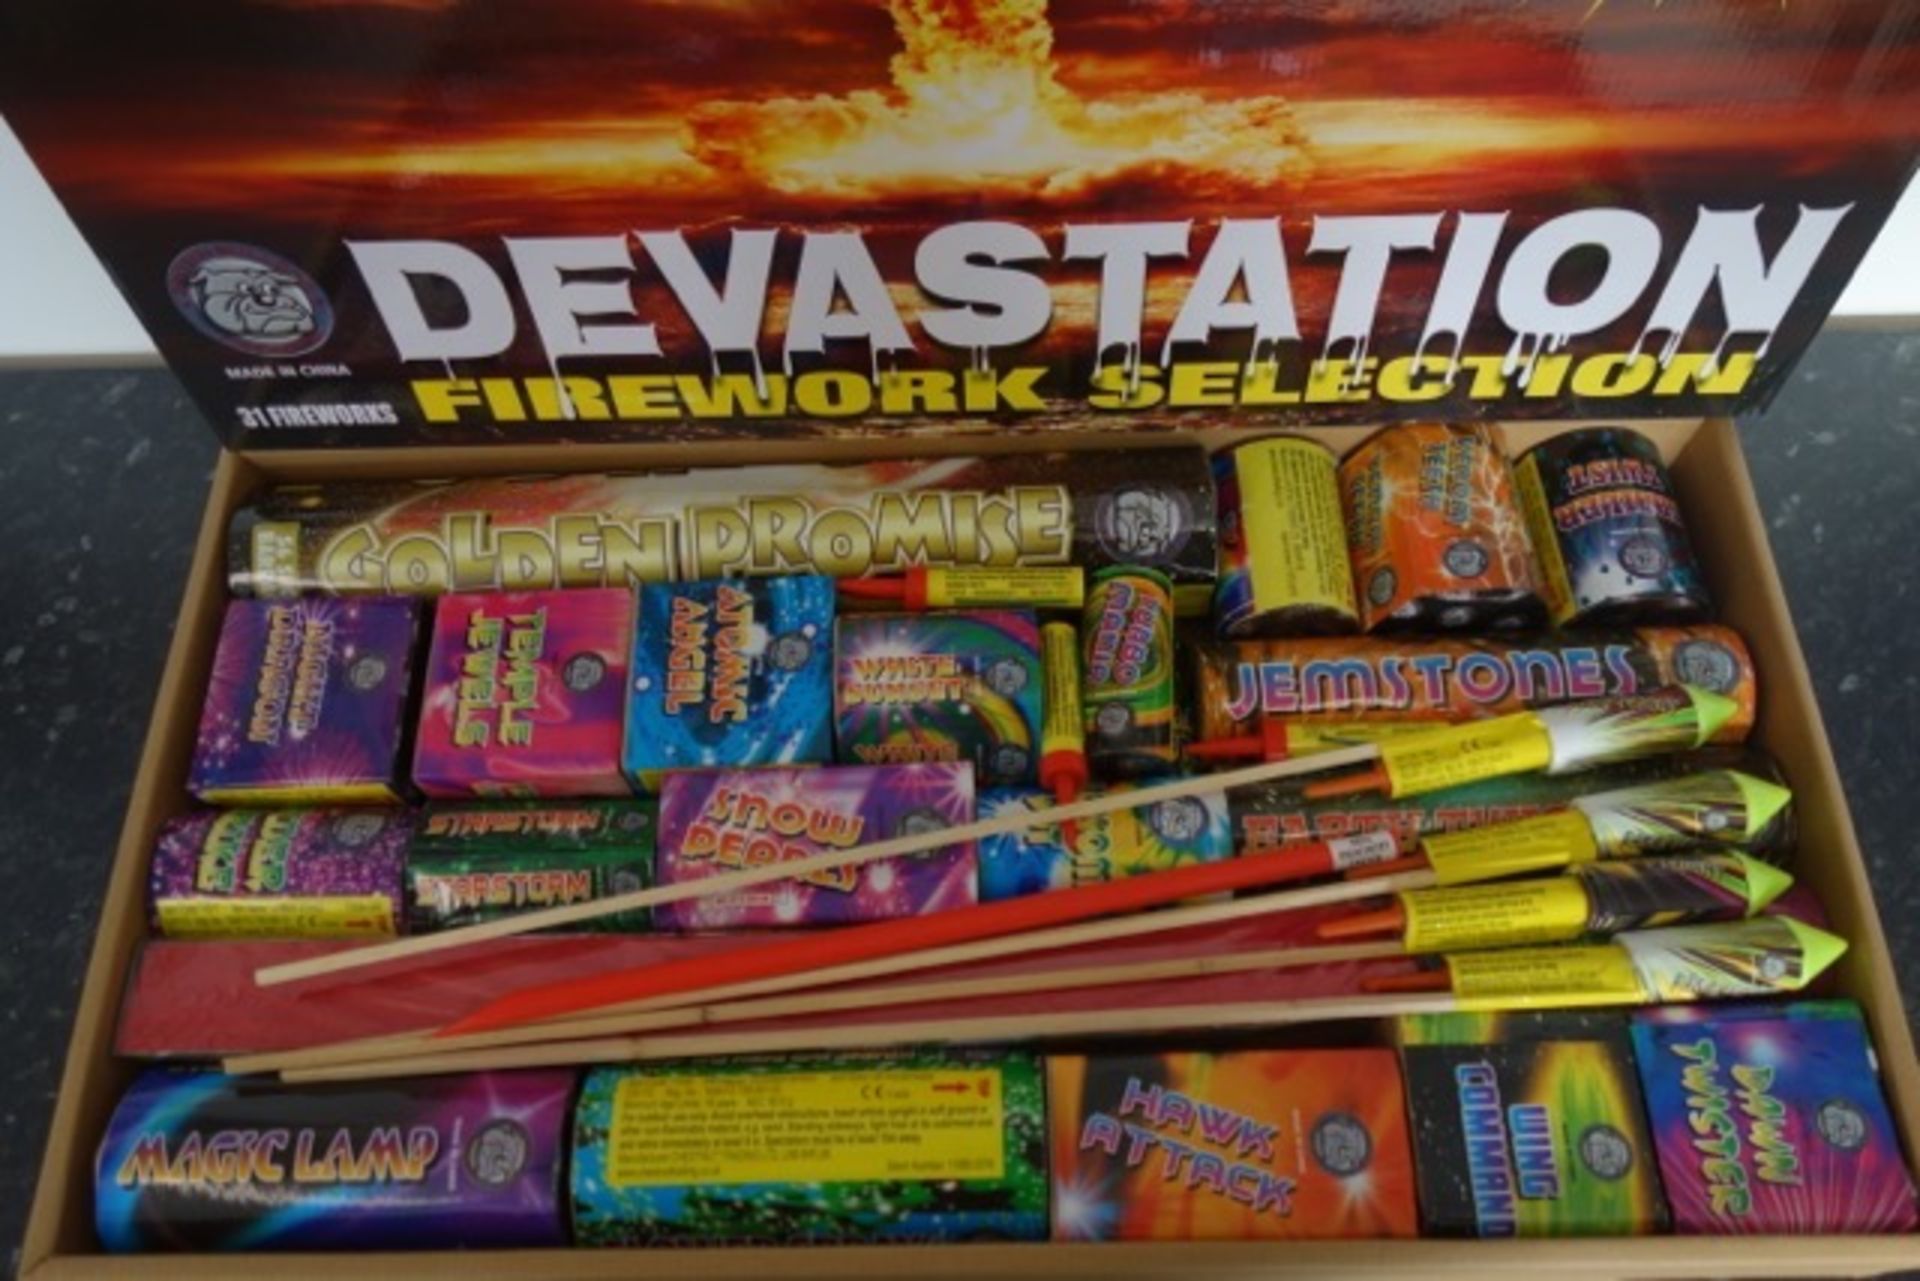 1 x DEVASTATION ULTIMATE SELECTION BOX BY BRITISH BULLDOG FIREWORK COMPANY - THIS YEARS NEW LOOK - Bild 2 aus 3